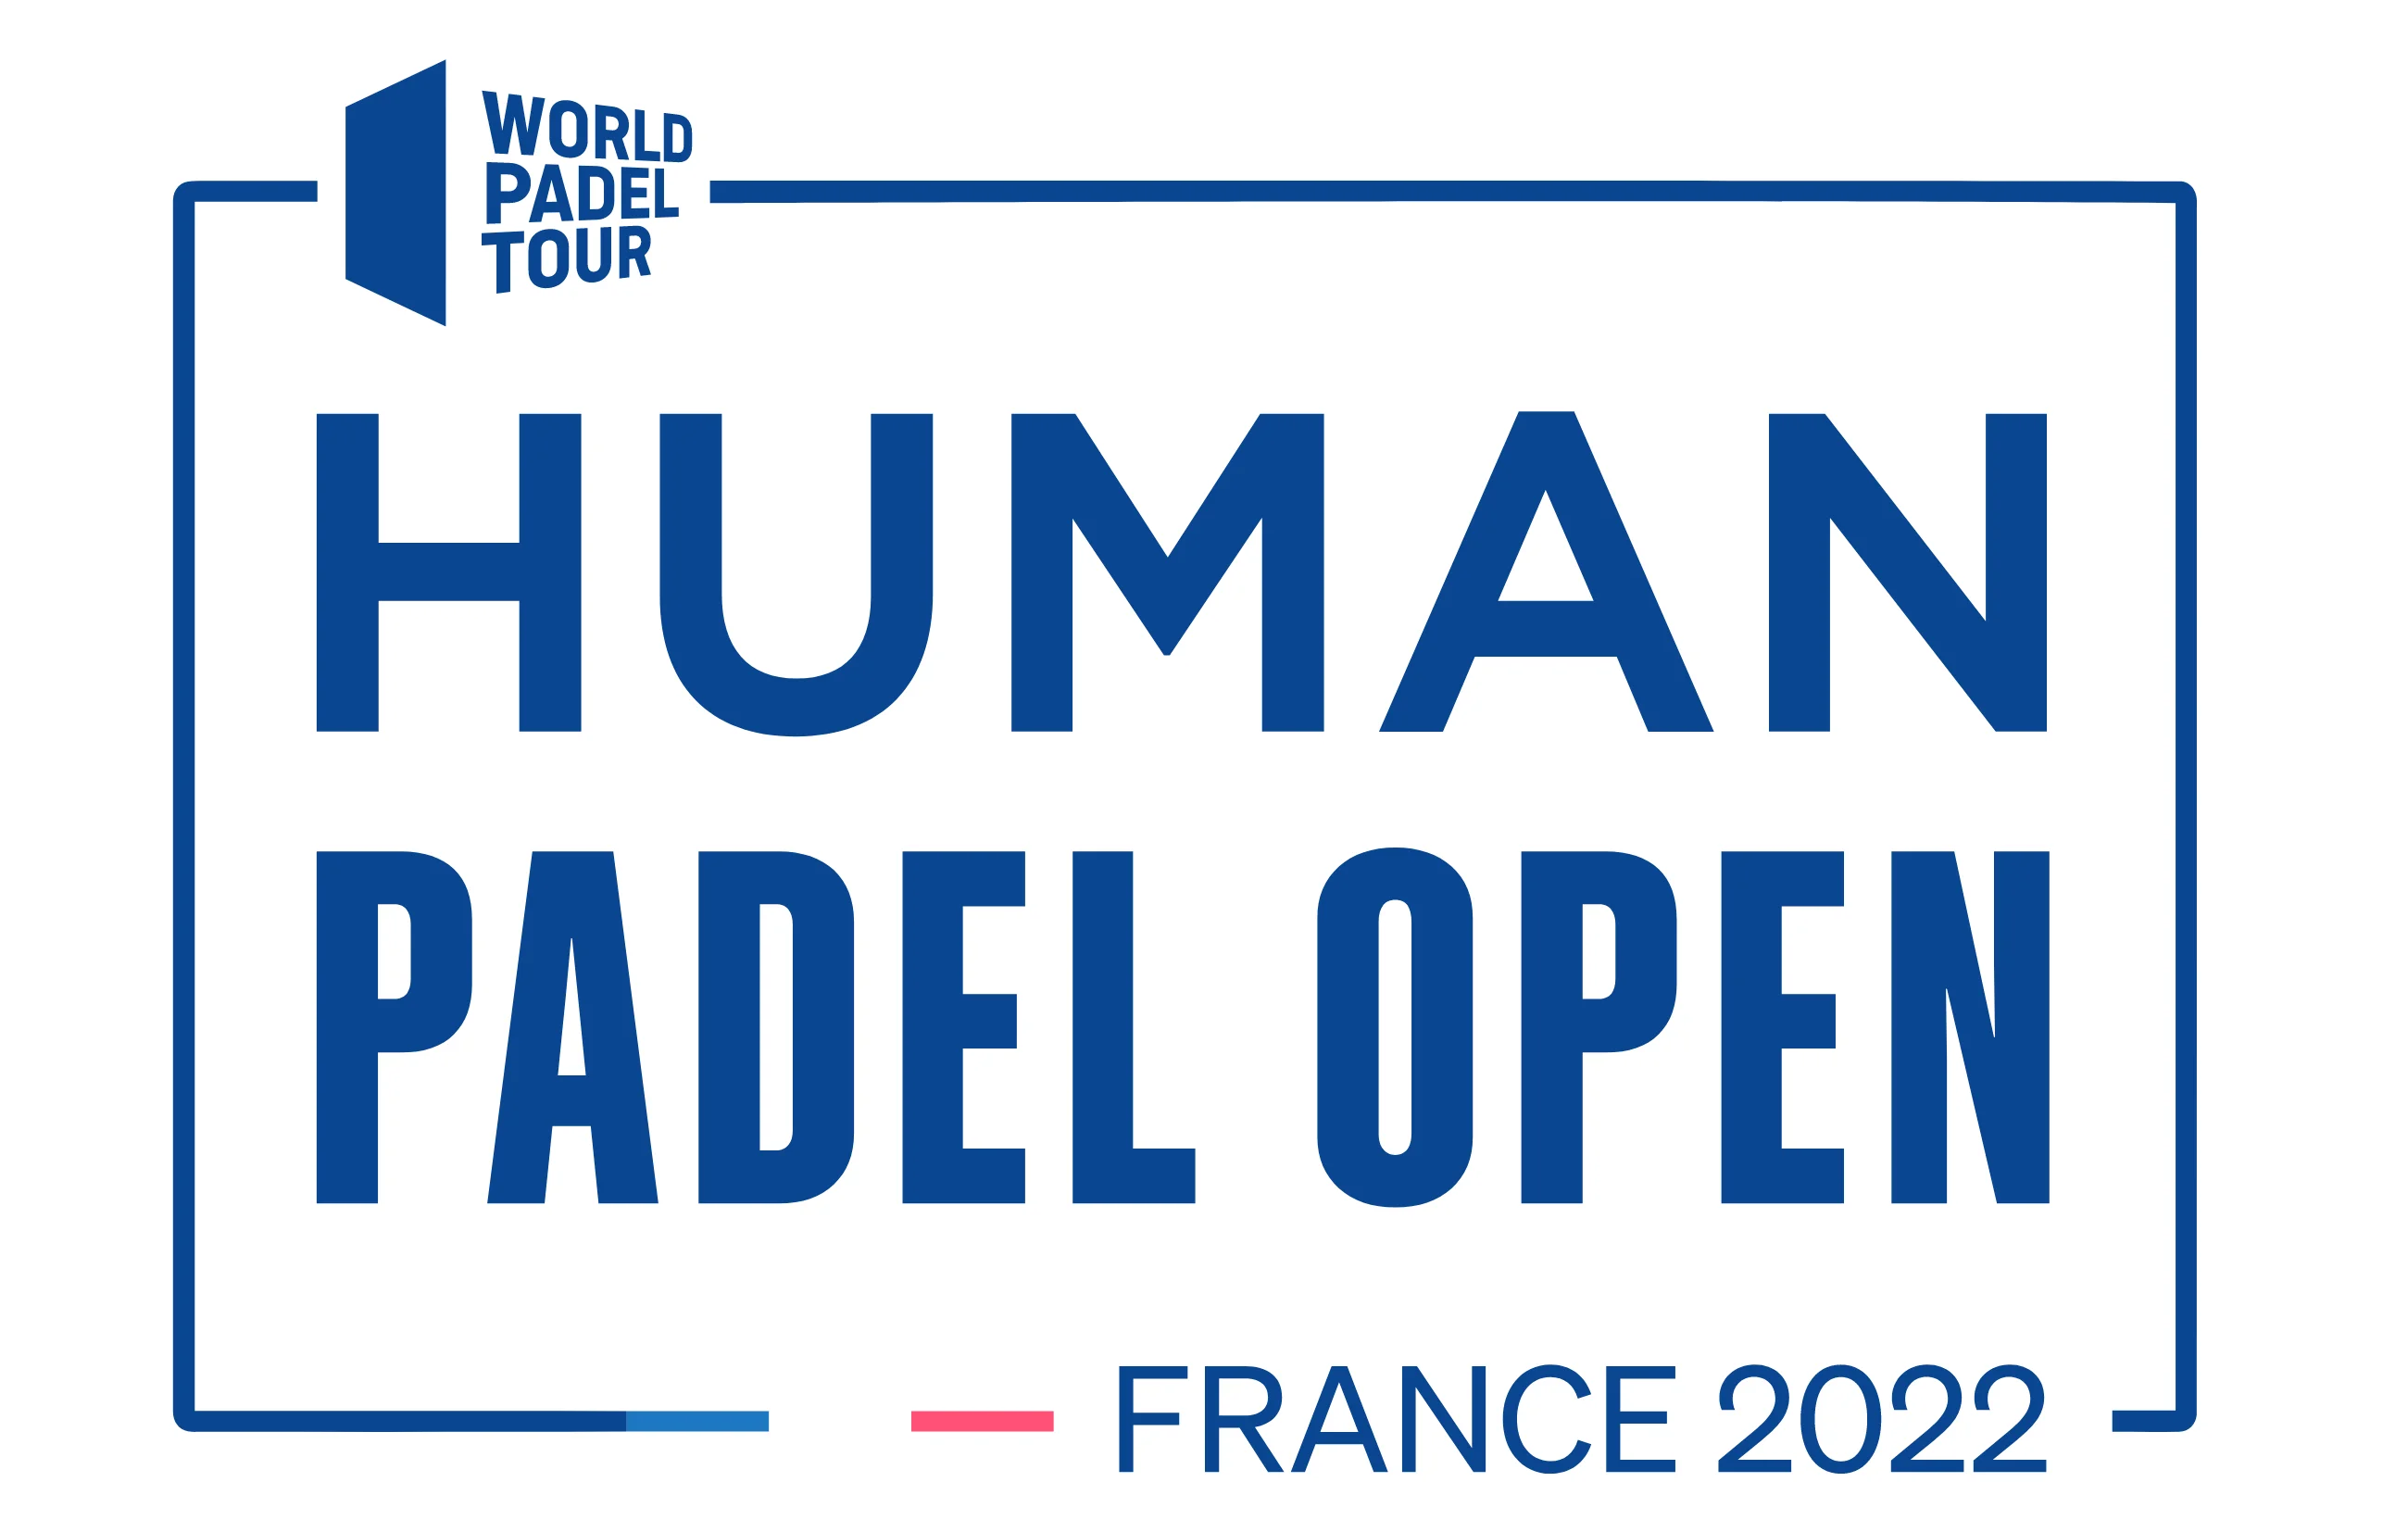 HUMAN PADEL ABIERTO world padel tour logo